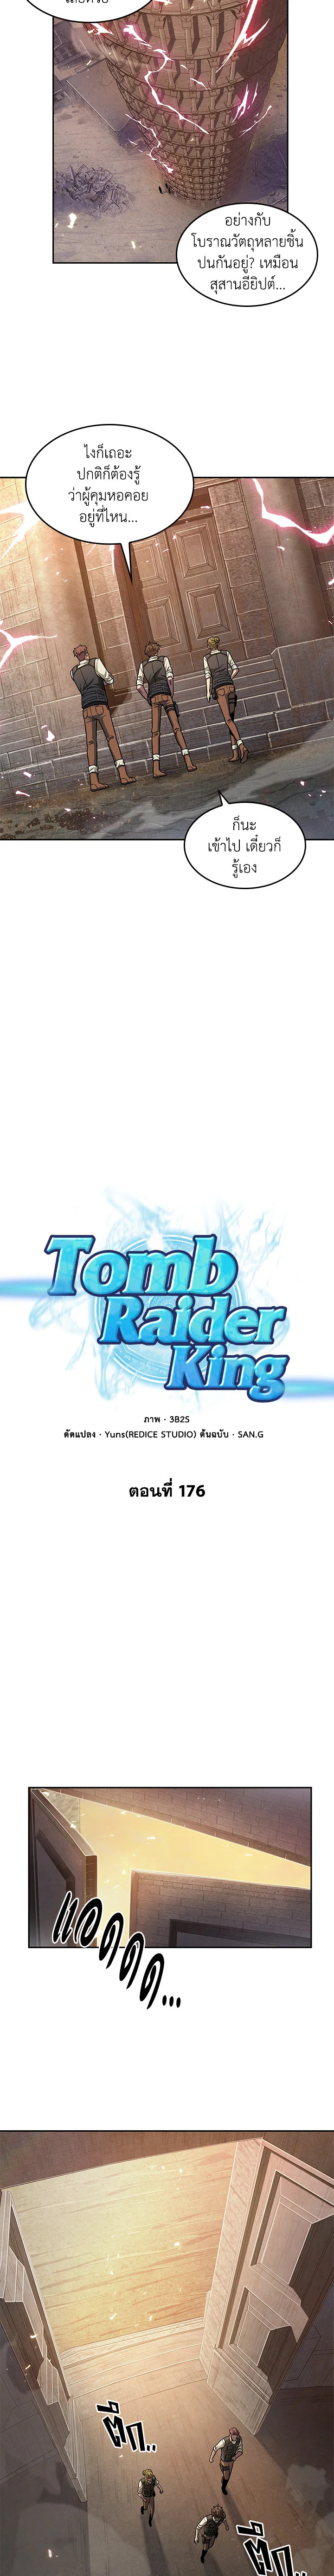 Tomb Raider King176 (2)